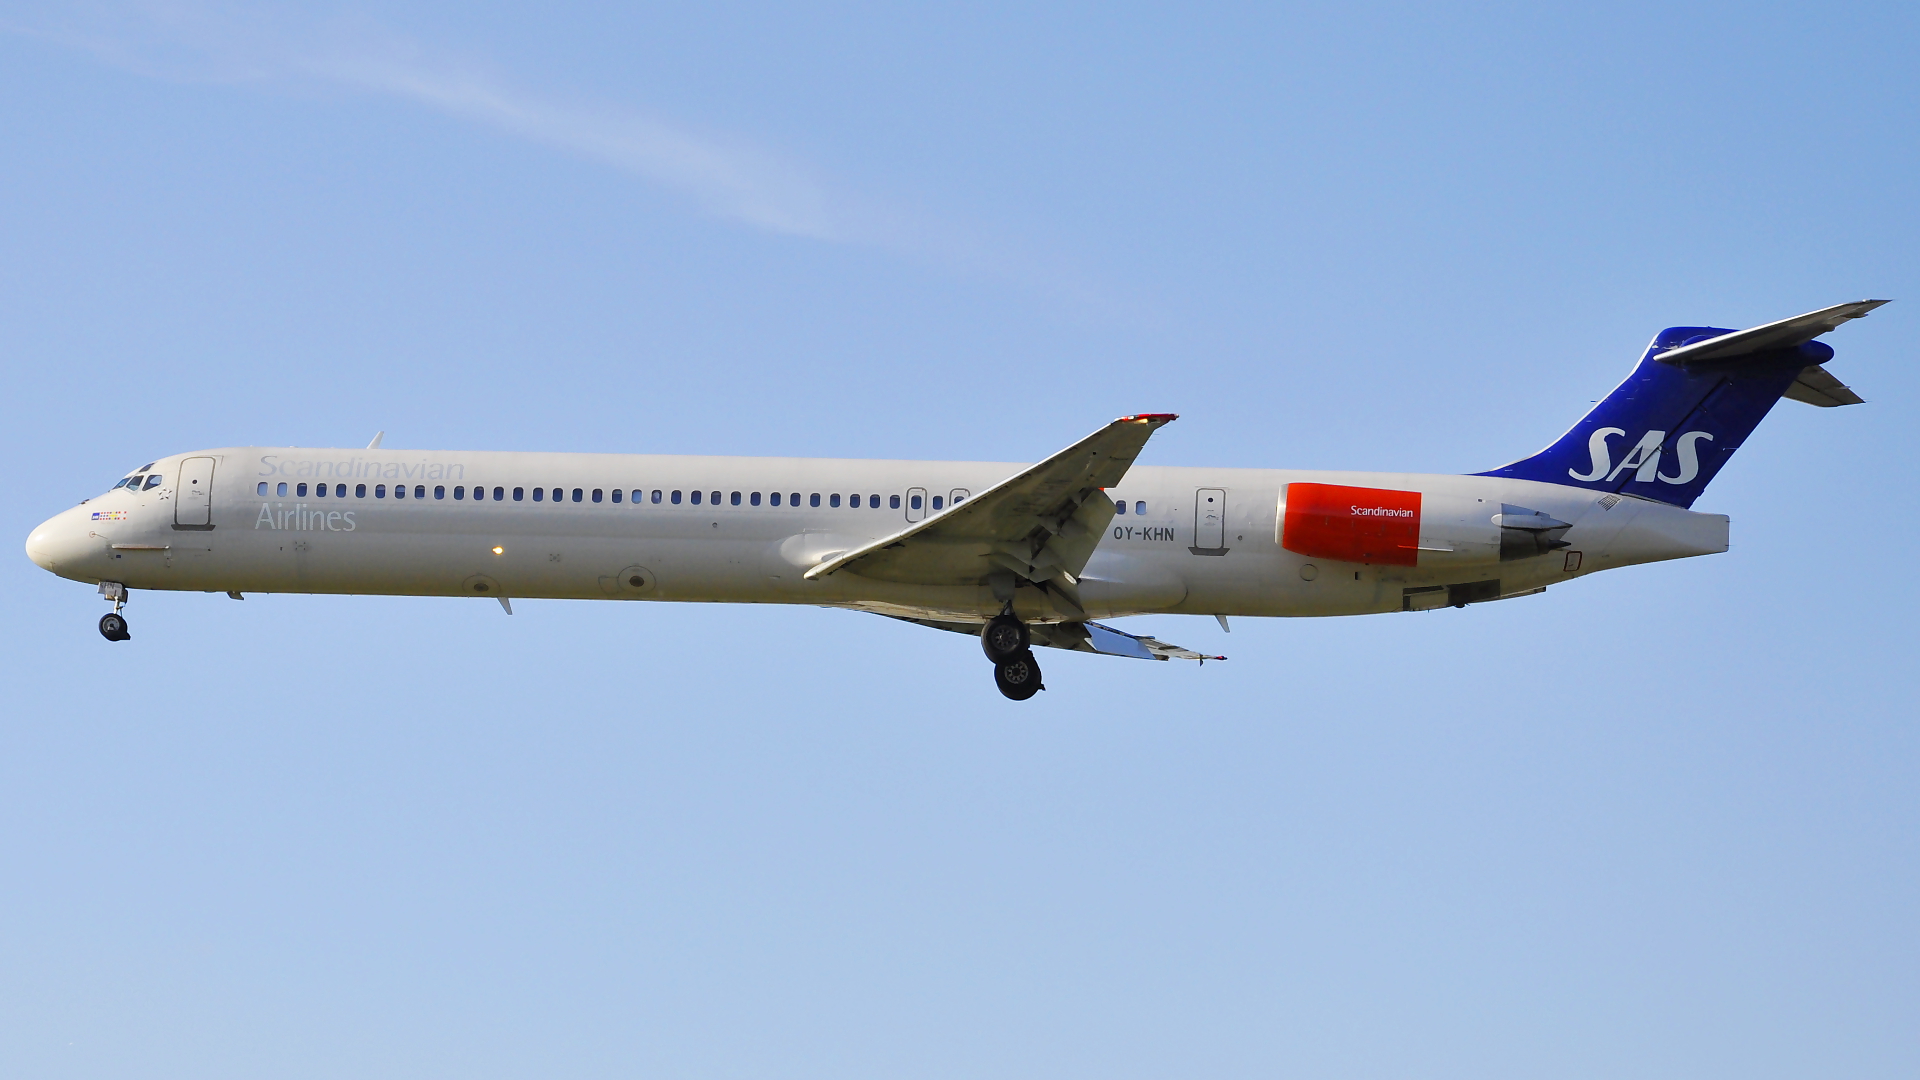 OY-KHN ✈ Scandinavian Airlines McDonnell Douglas MD-82 @ London-Heathrow